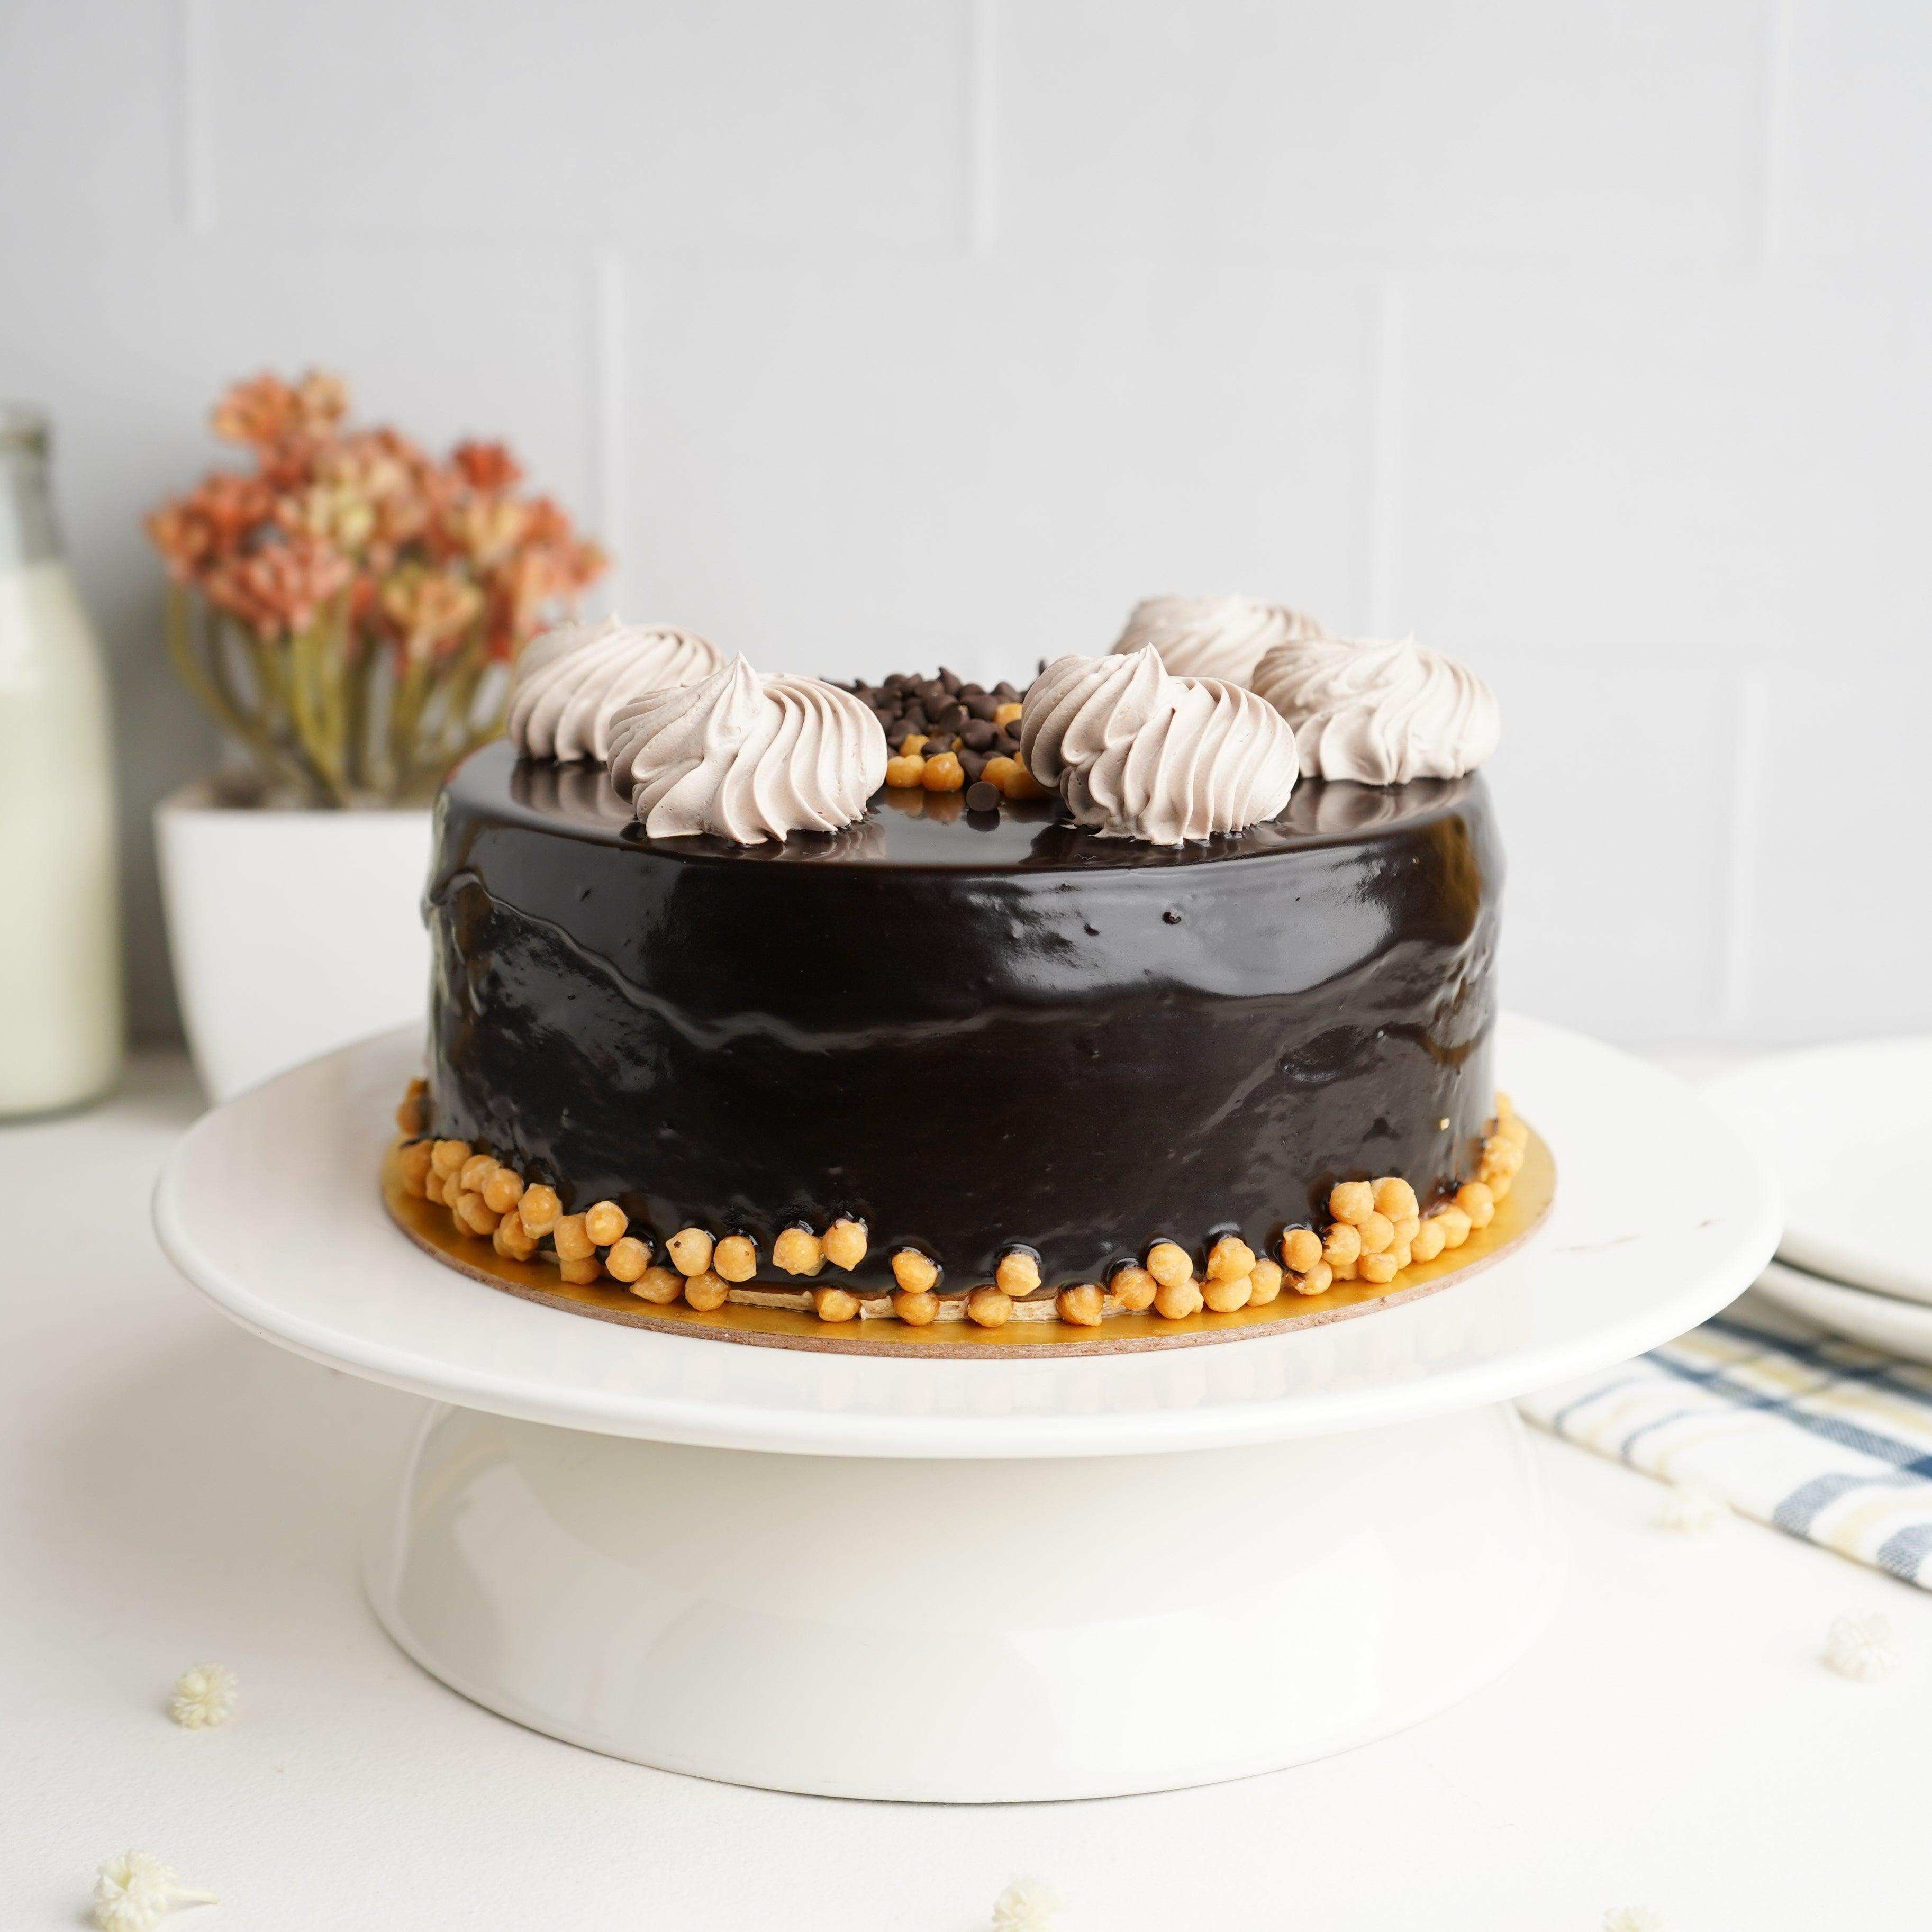 Michelle's Tasty Creations: Chocolate Caramel Crunch Cake